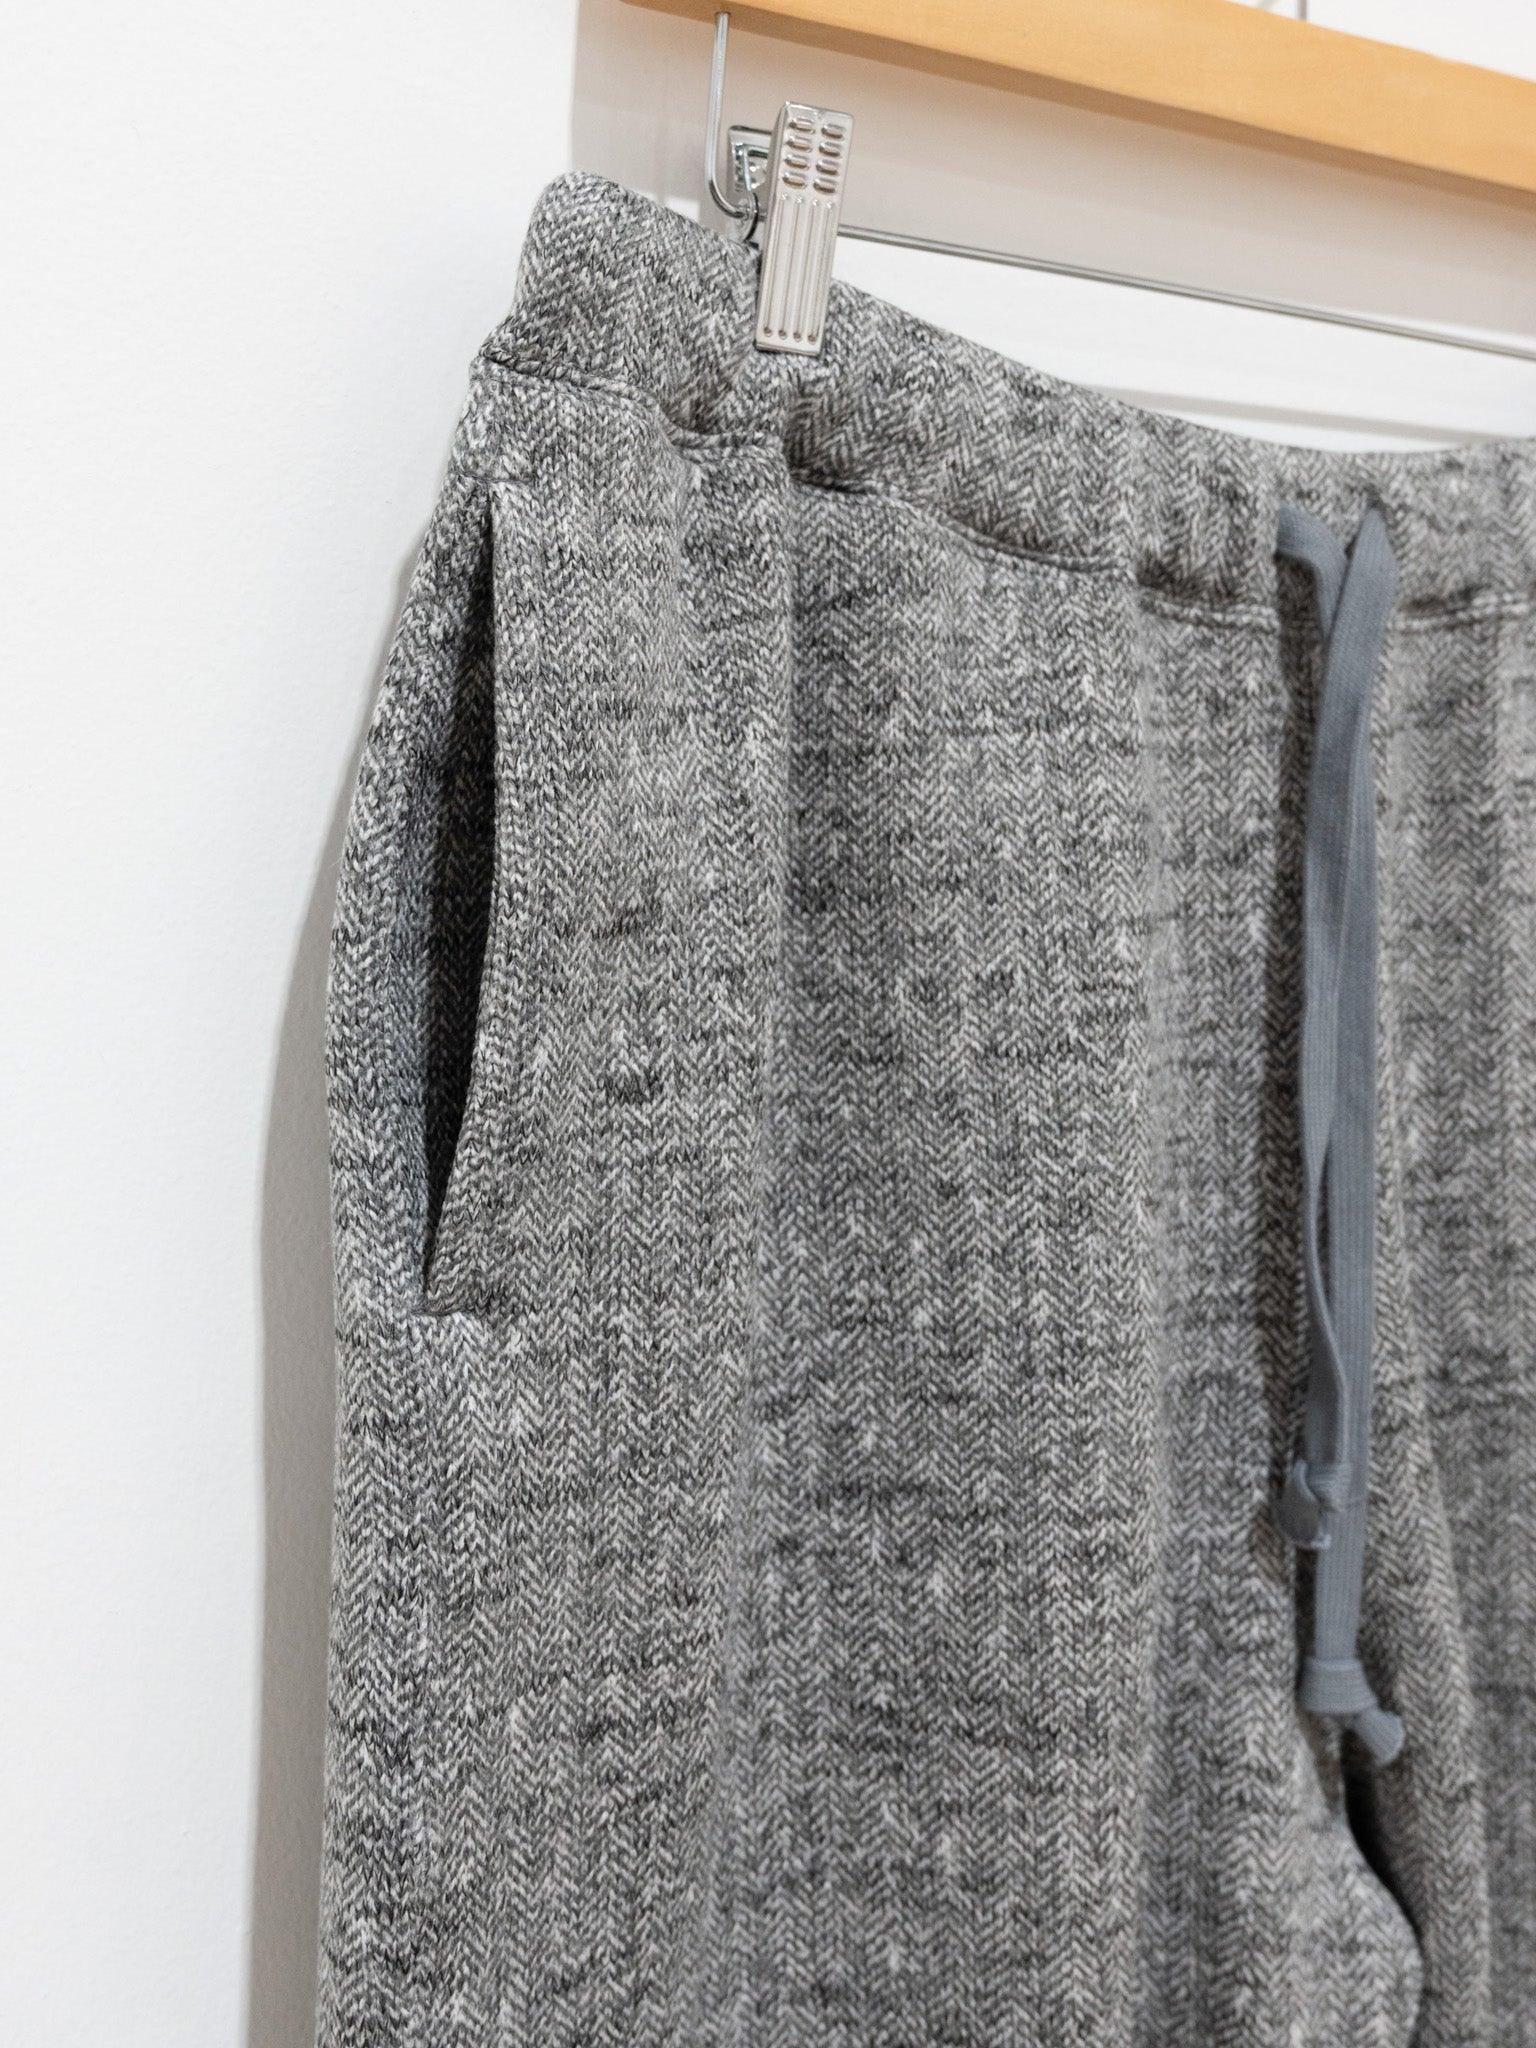 Namu Shop - ts(s) Back Brushed Herringbone Jersey Sweatpants - Gray